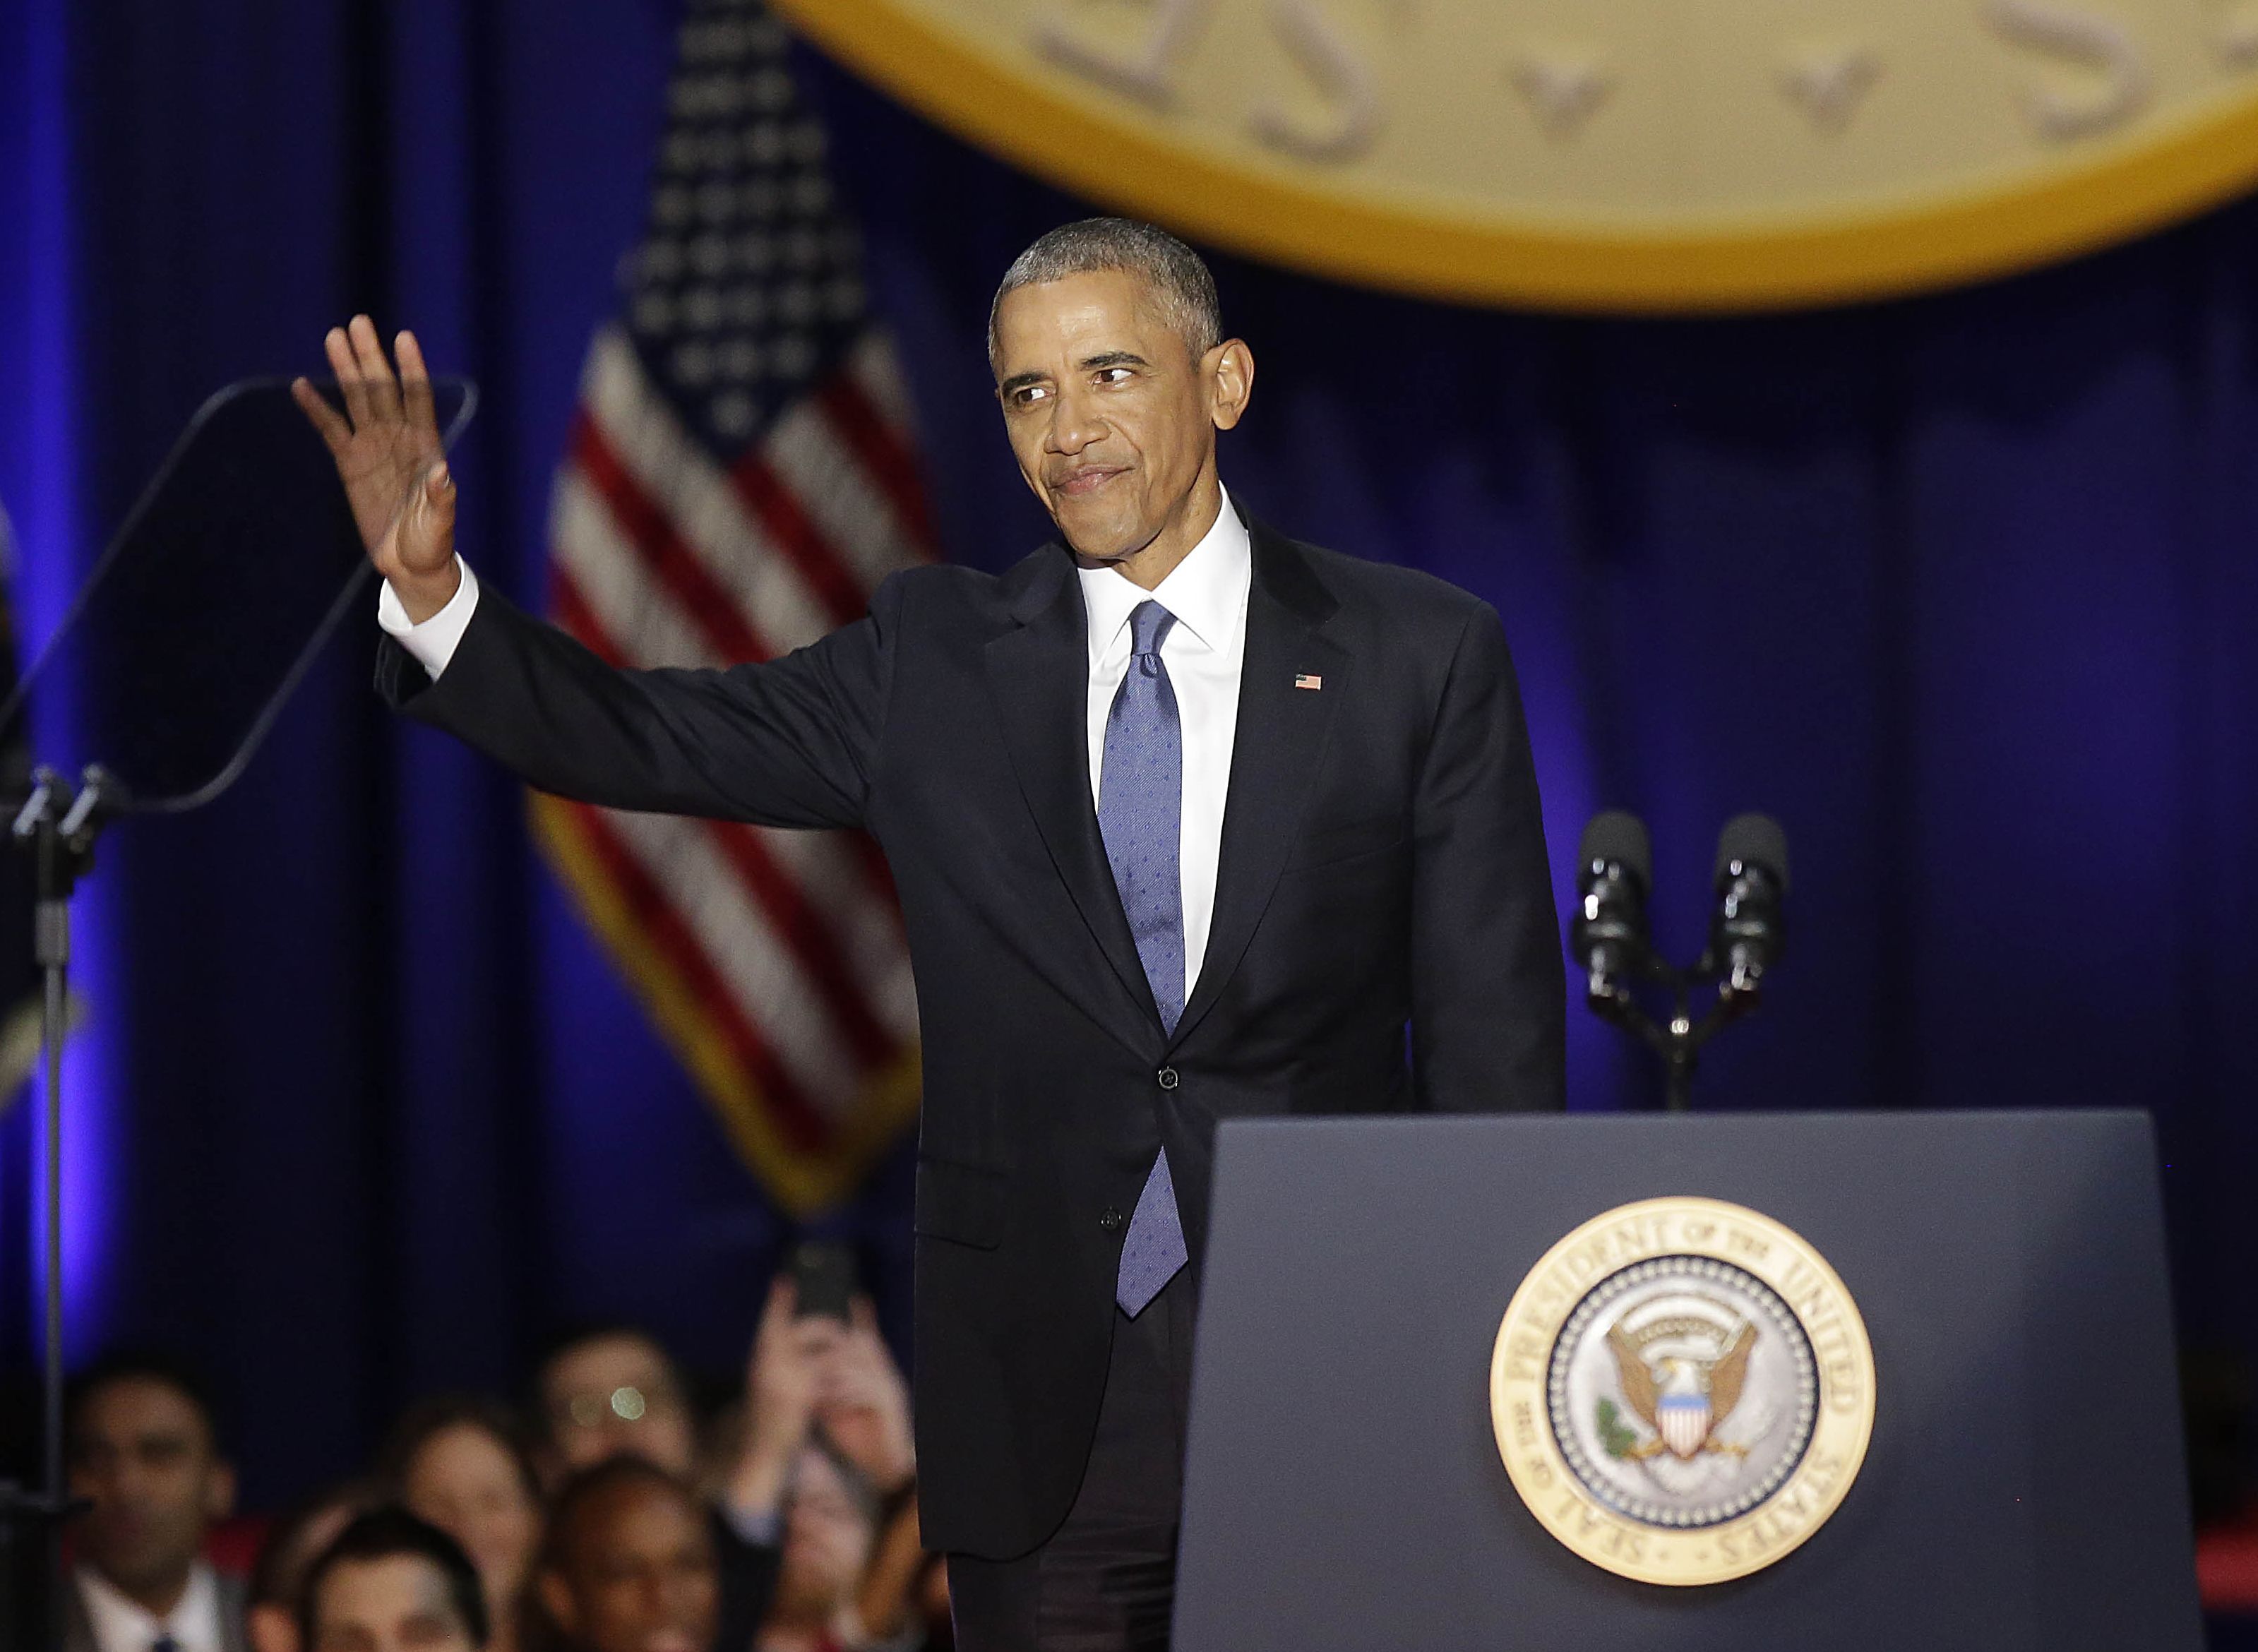 President Obama farewell address: full text, video | CNN Politics